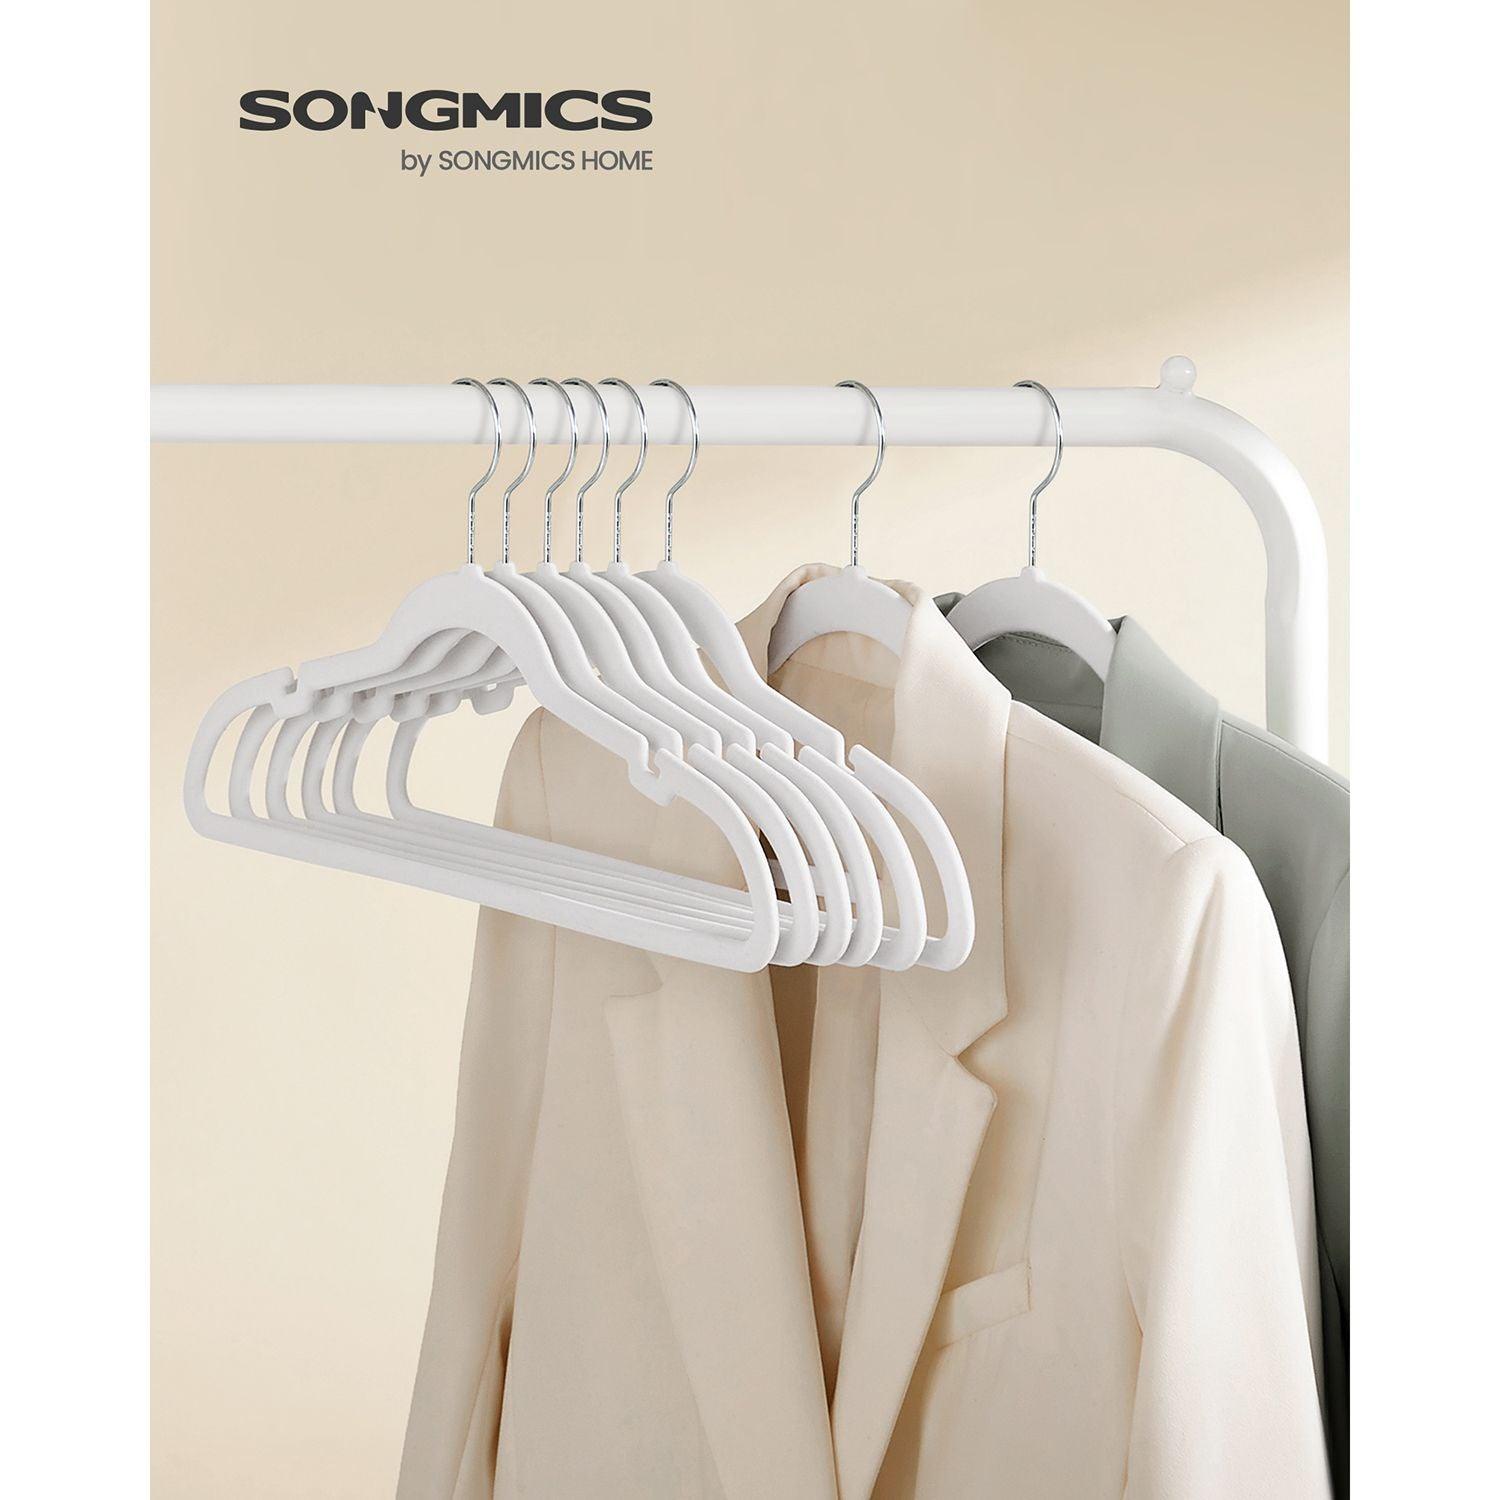 Clothes Hangers, Pack of 50 Plastic Coat Hangers, Non Slip, Space